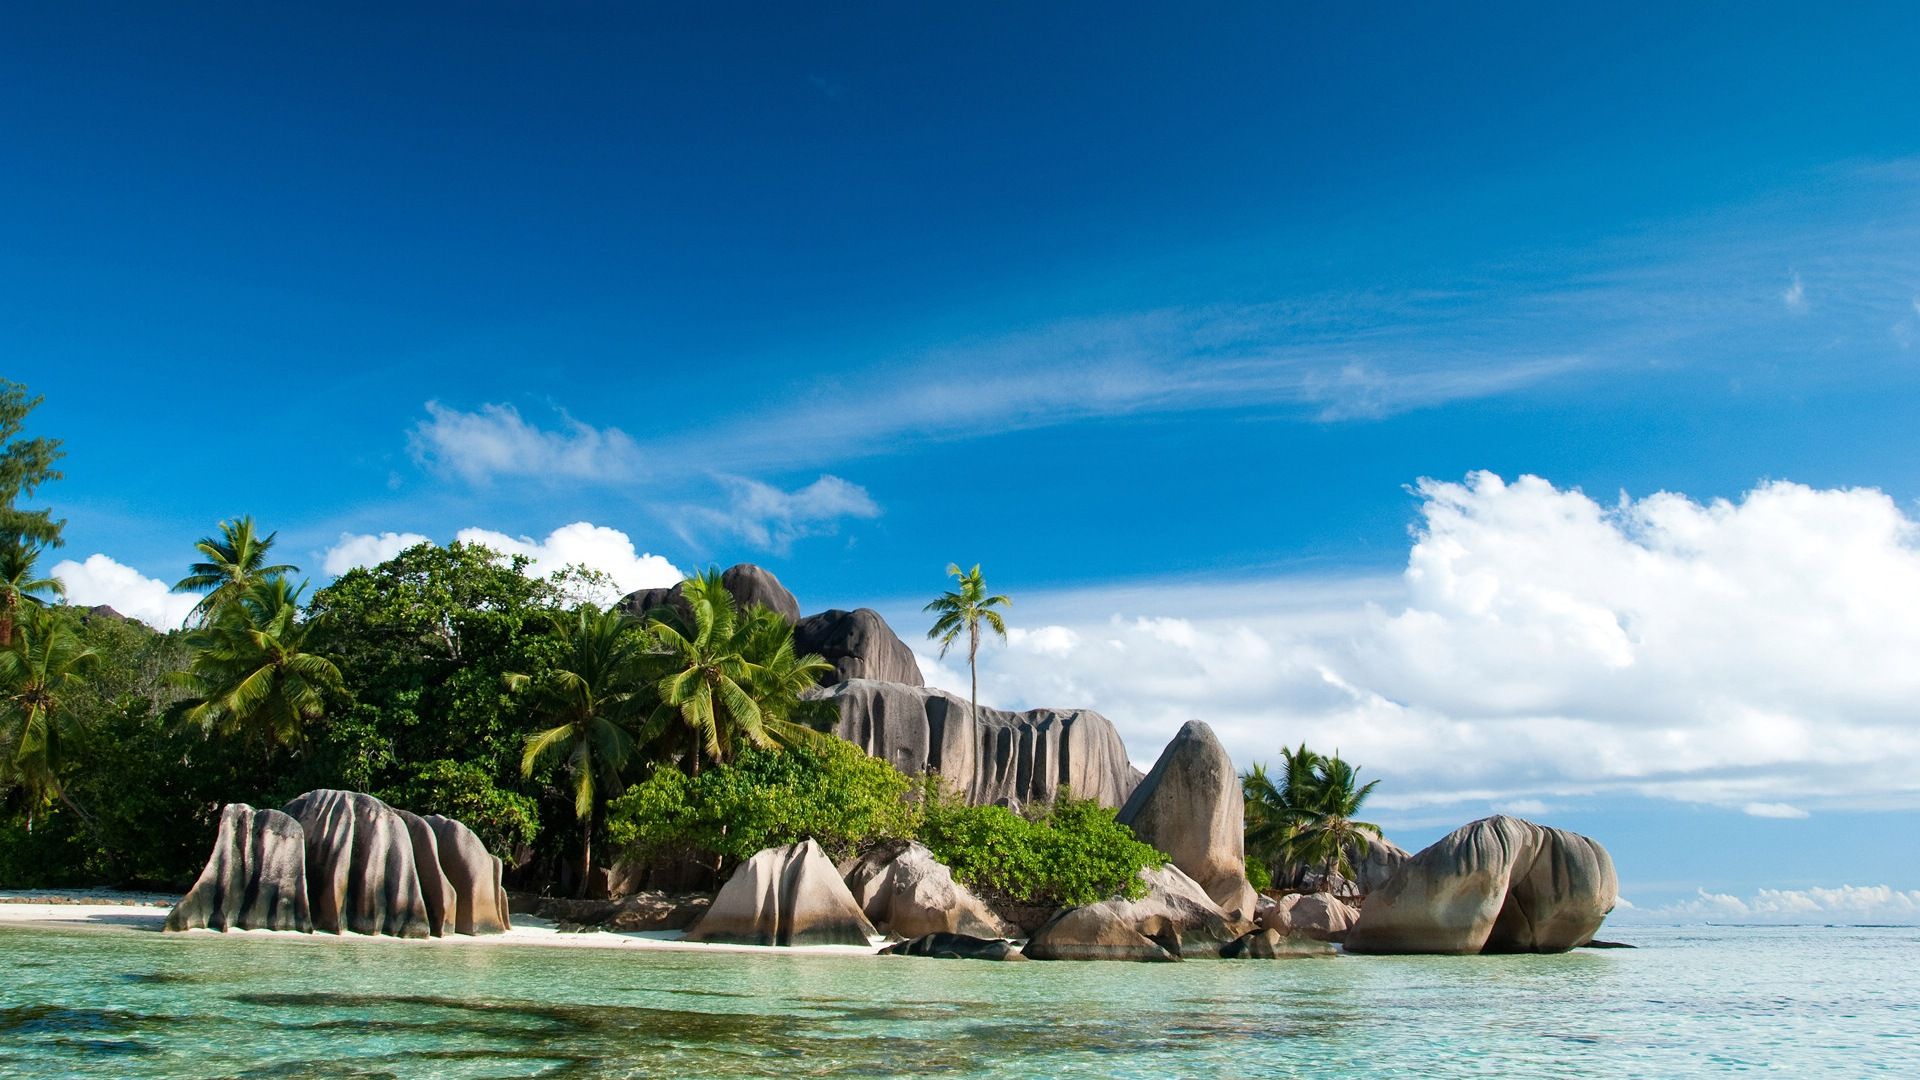 Seychelles Islands Windows 8 Theme All For Windows 10 Free